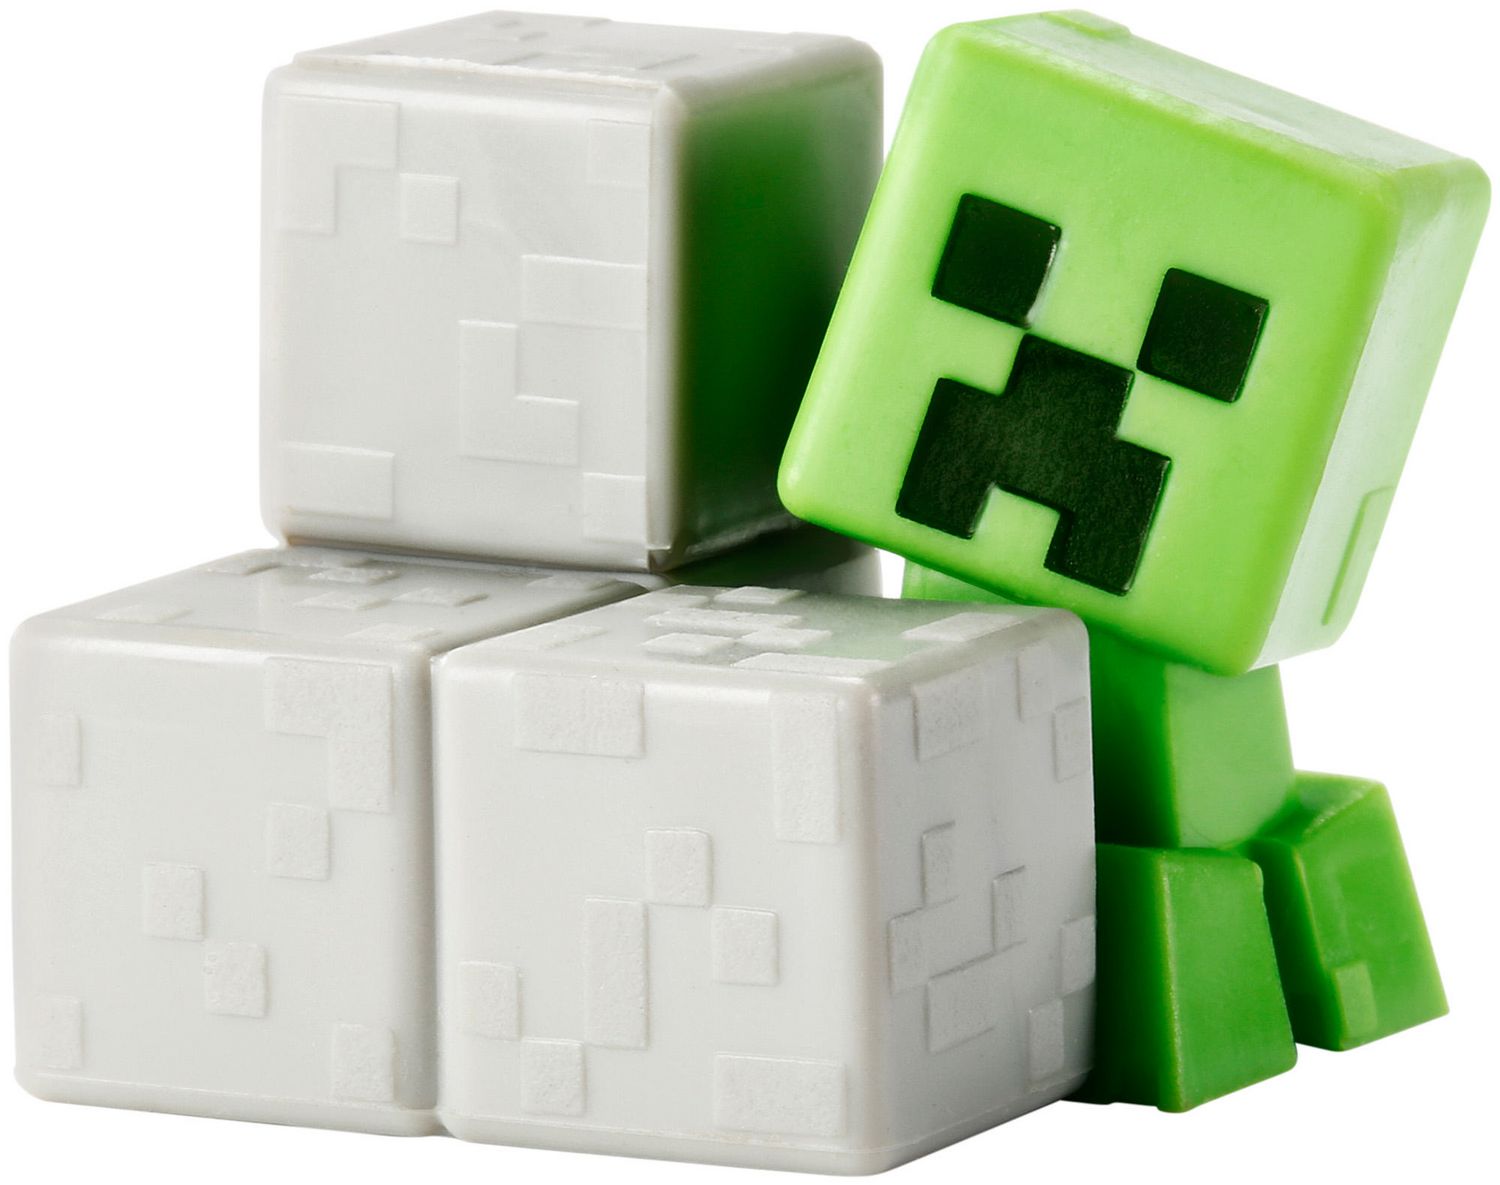 Minecraft 3-Pack Mini Figure - Elder Guardian, Sneaky Creeper